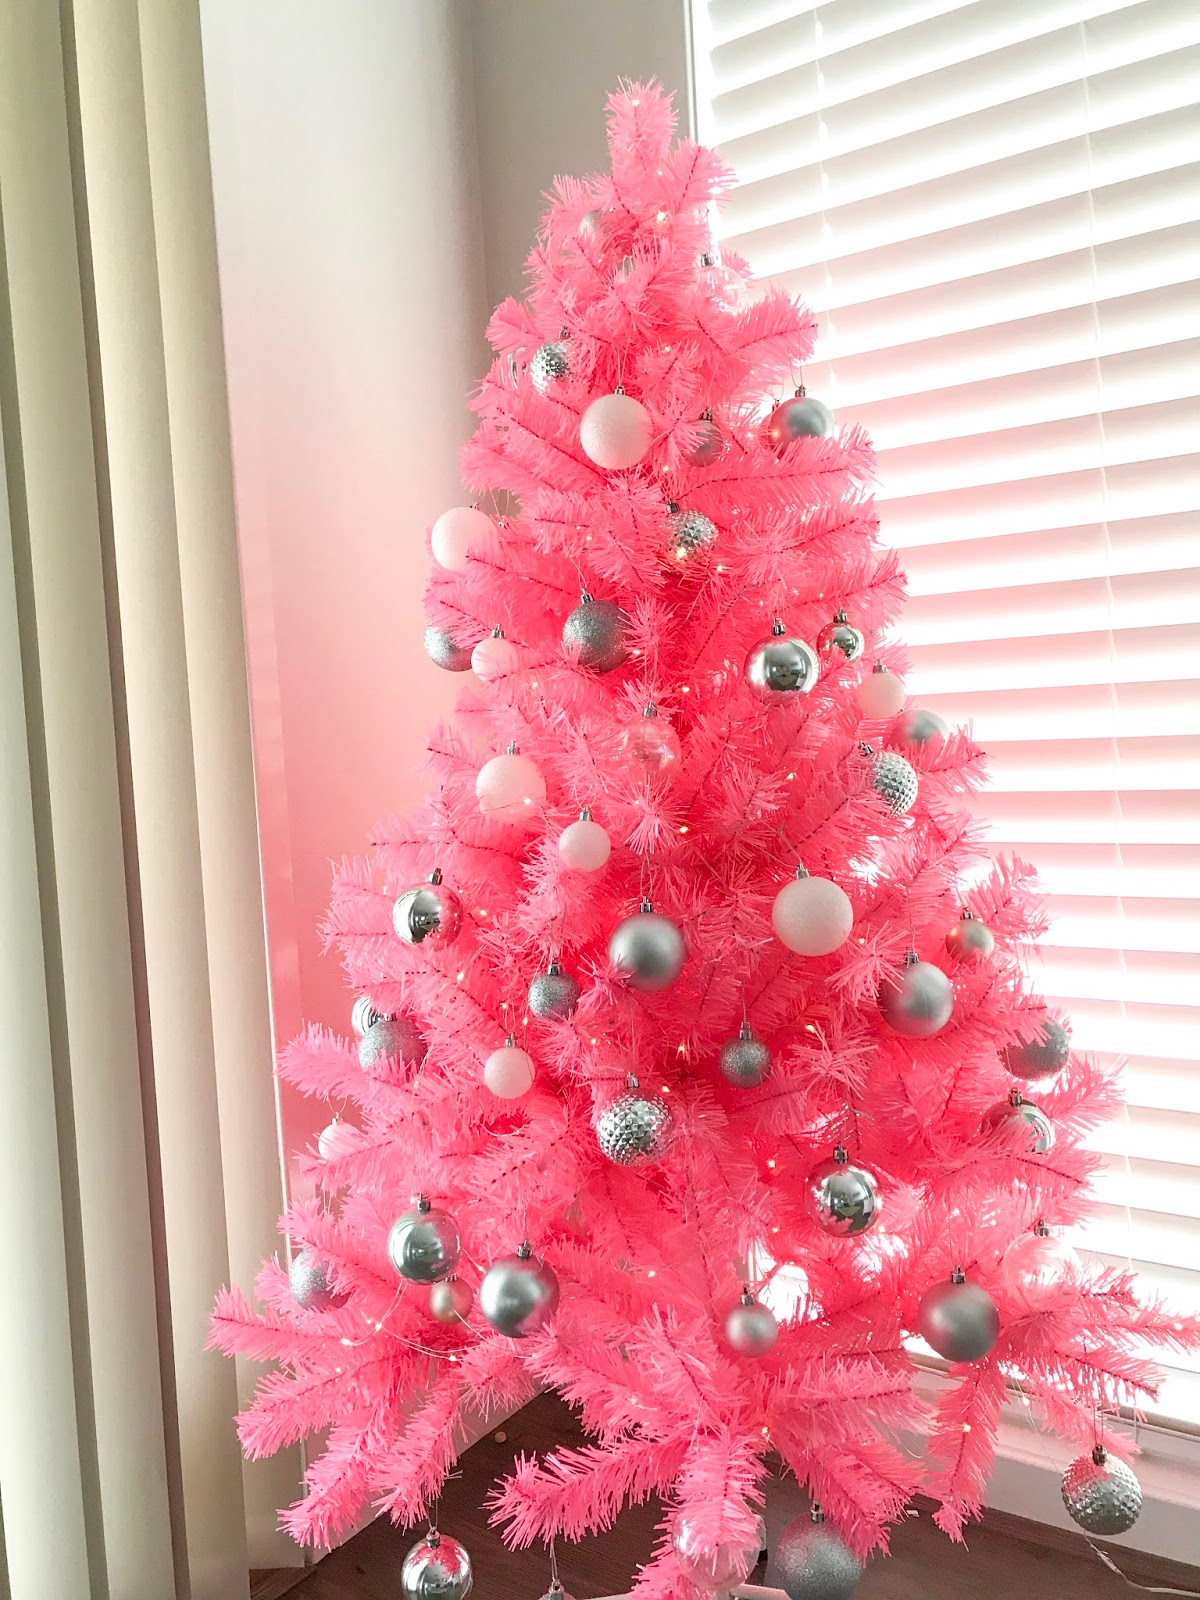 Think Pink... the story of a Christmas tree - Samelia's Mum